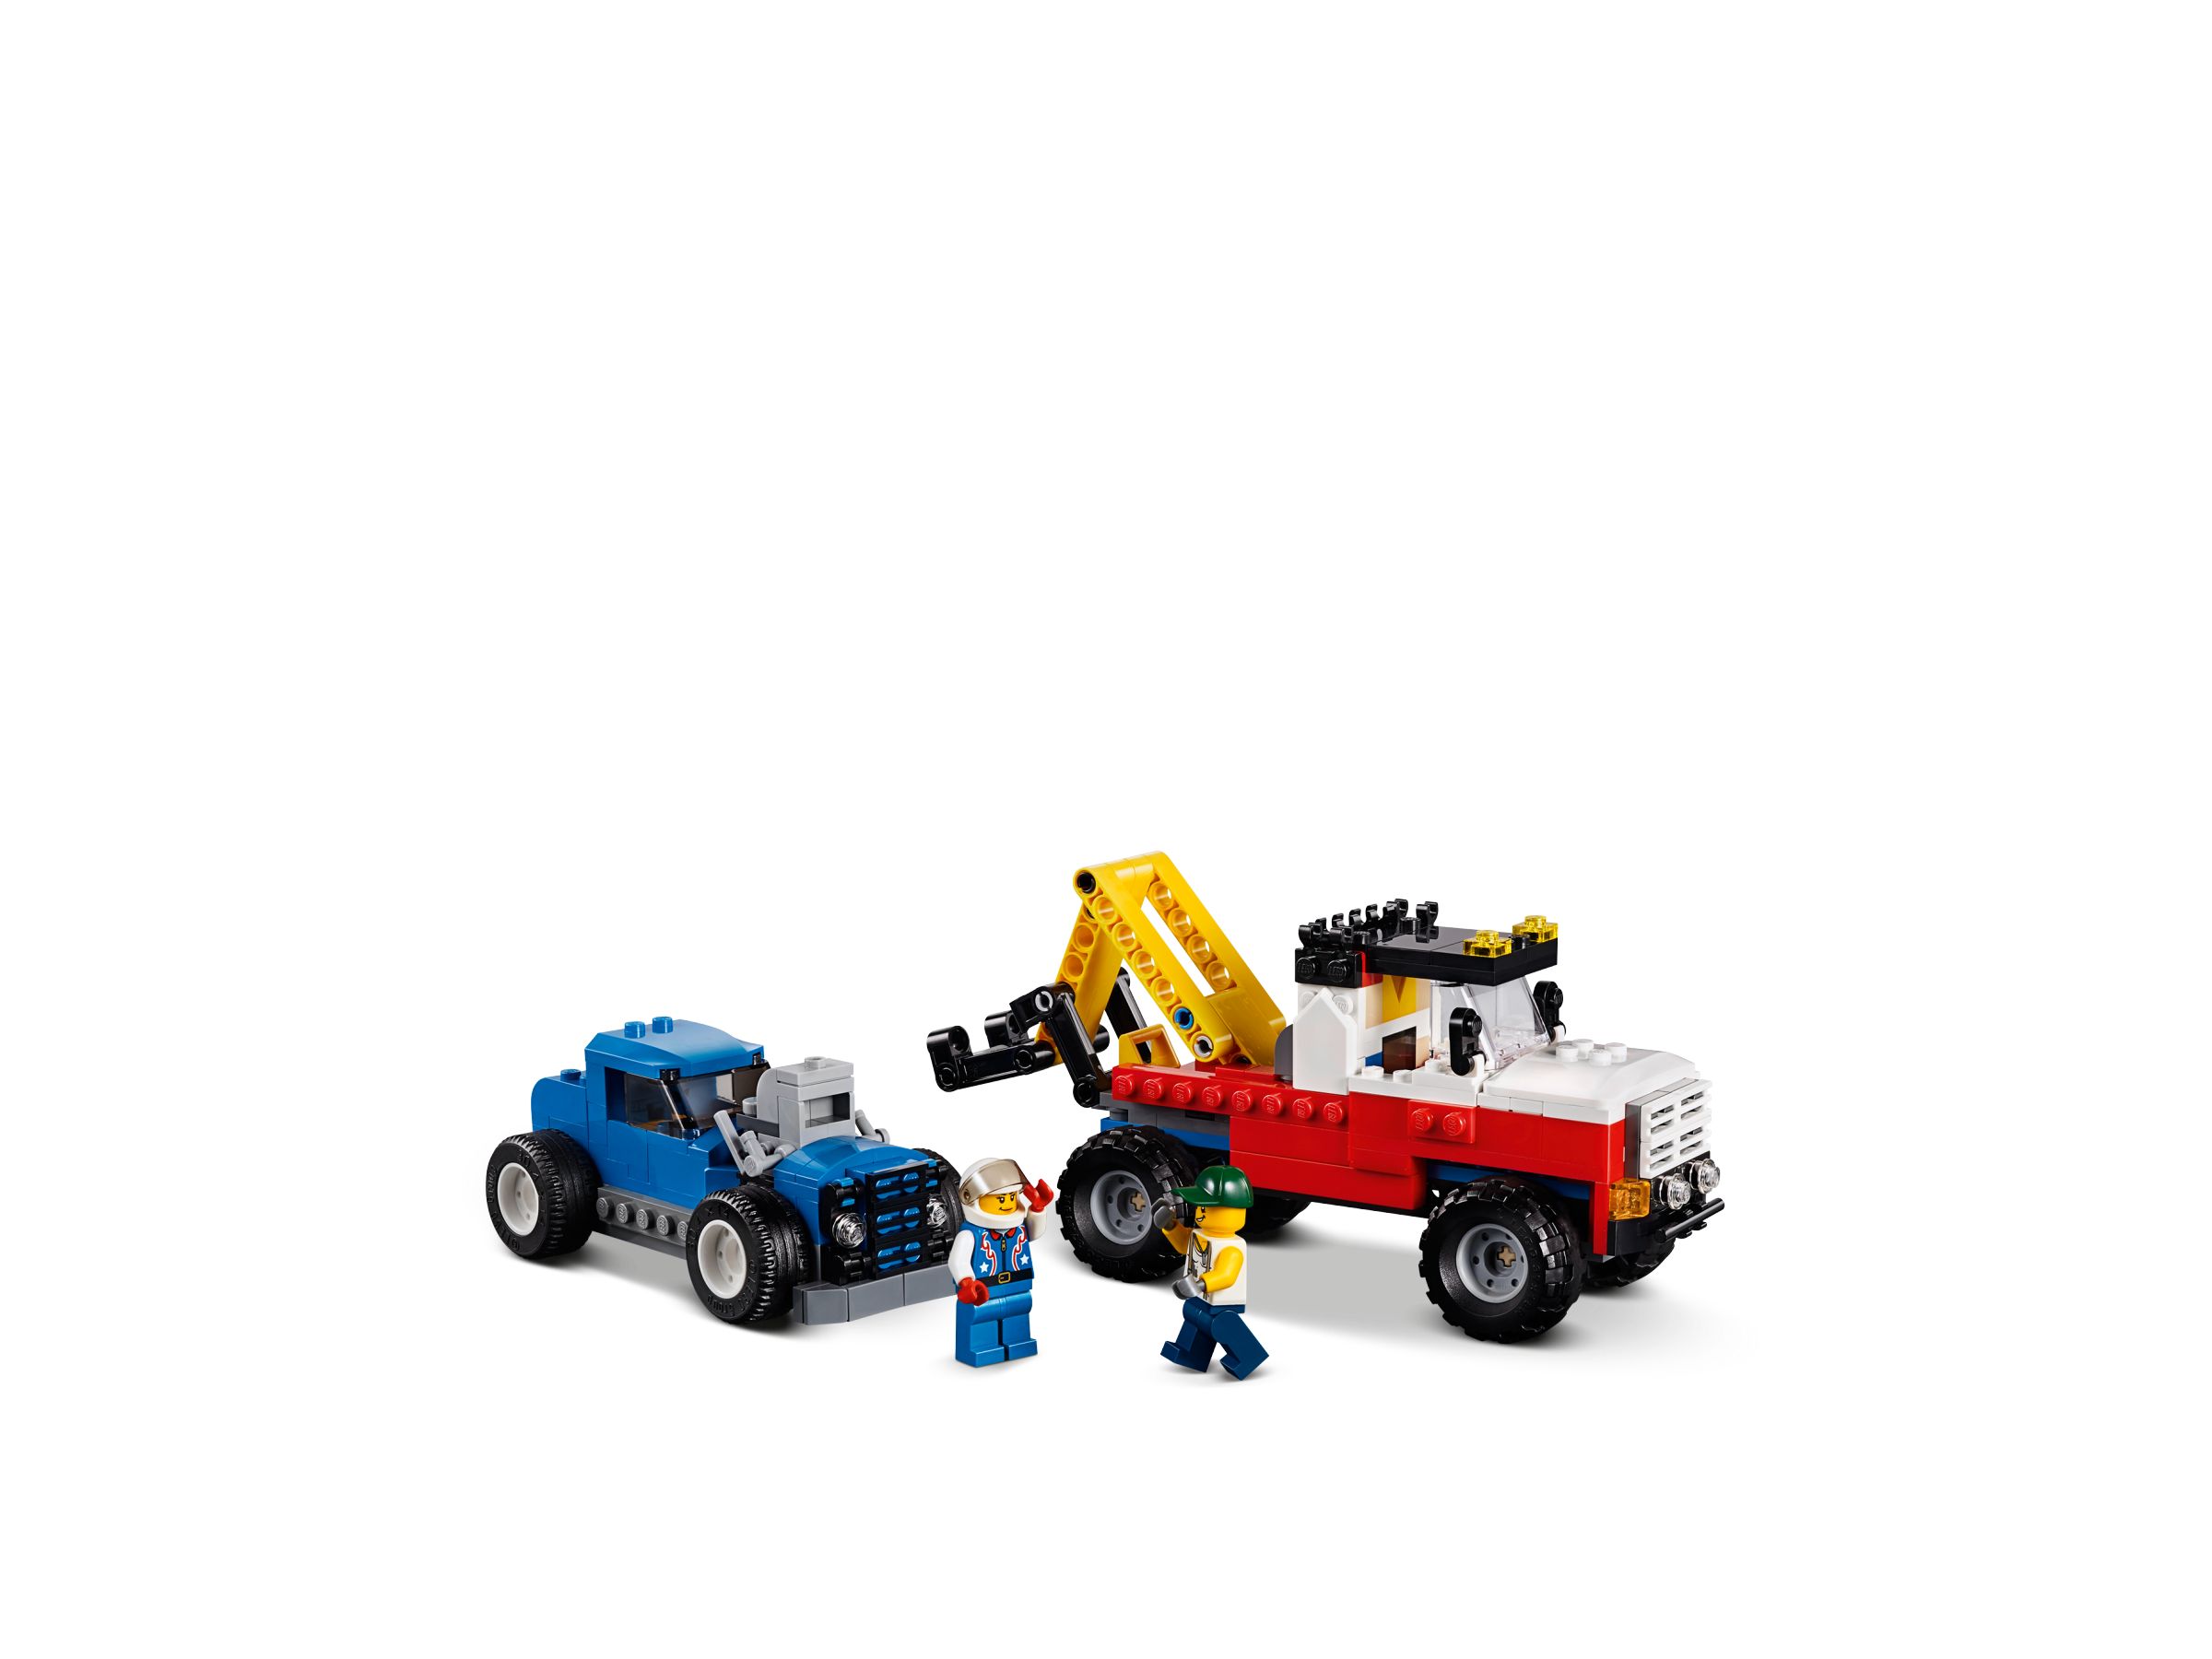 LEGO Creator 31085 Stunt-Truck-Transporter LEGO_31085_alt3.jpg